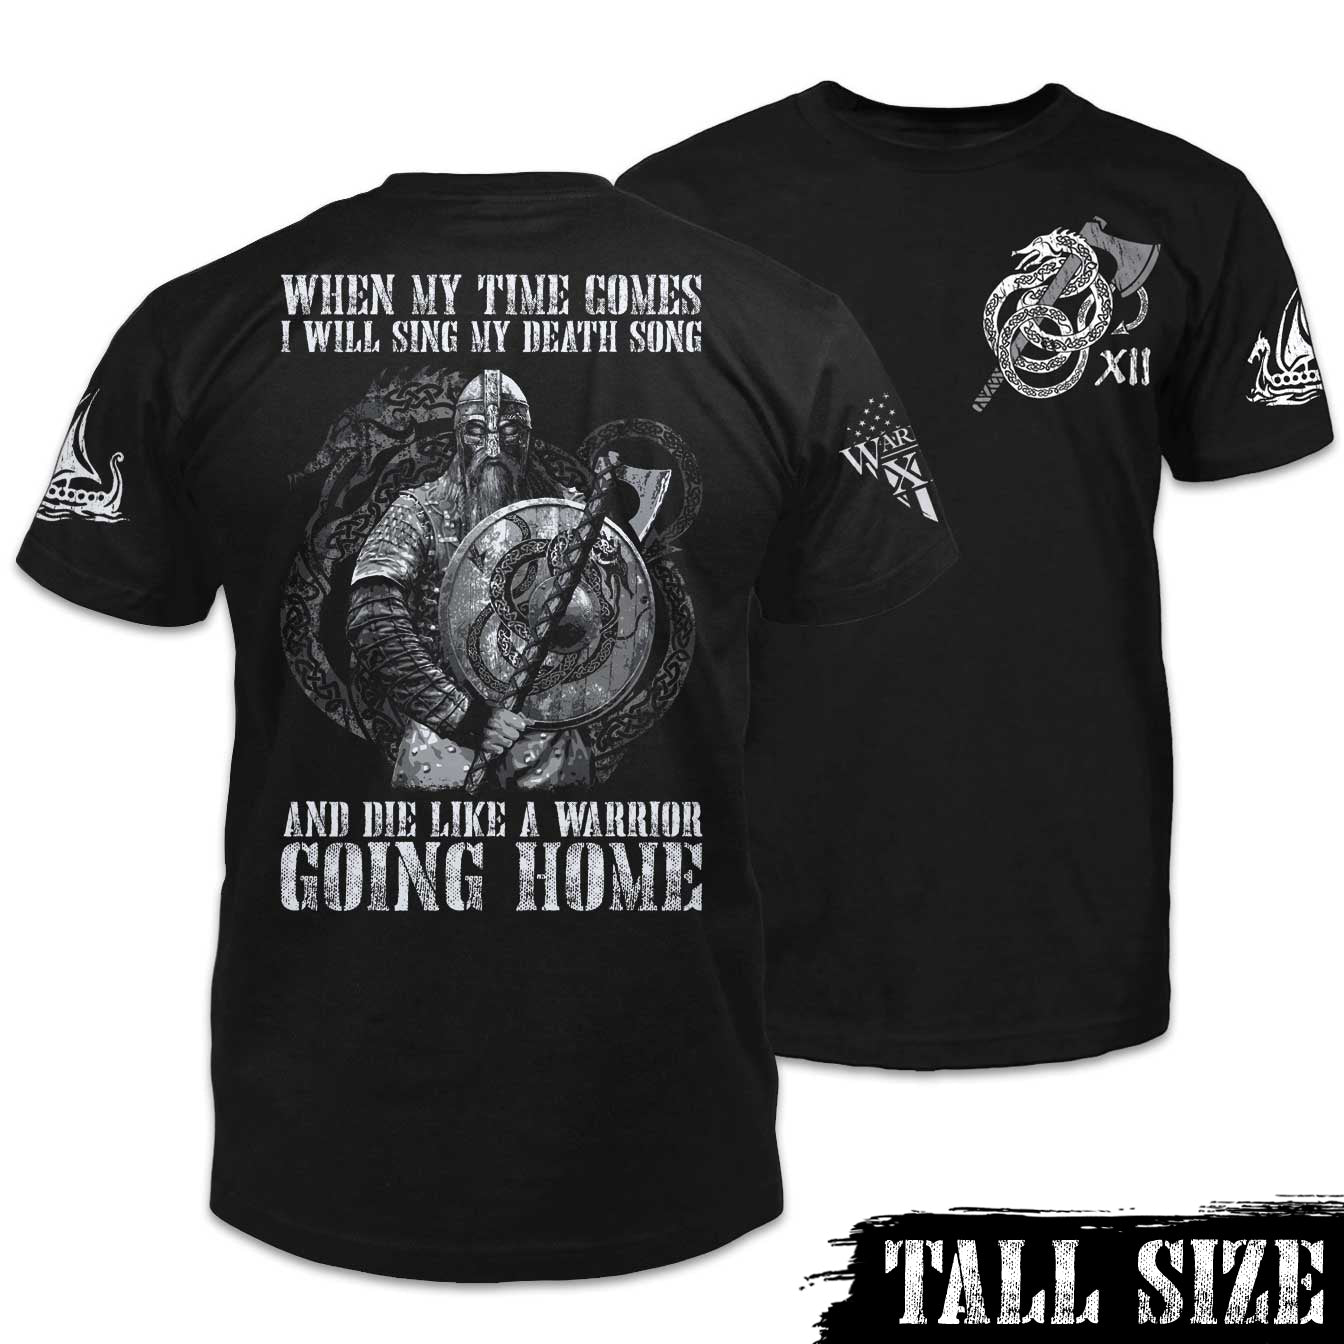 Die Like A Warrior - Tall Size T-Shirt Patriotic Tribute Tee | American Pride Veteran Shirt | 100% Cotton Military Apparel